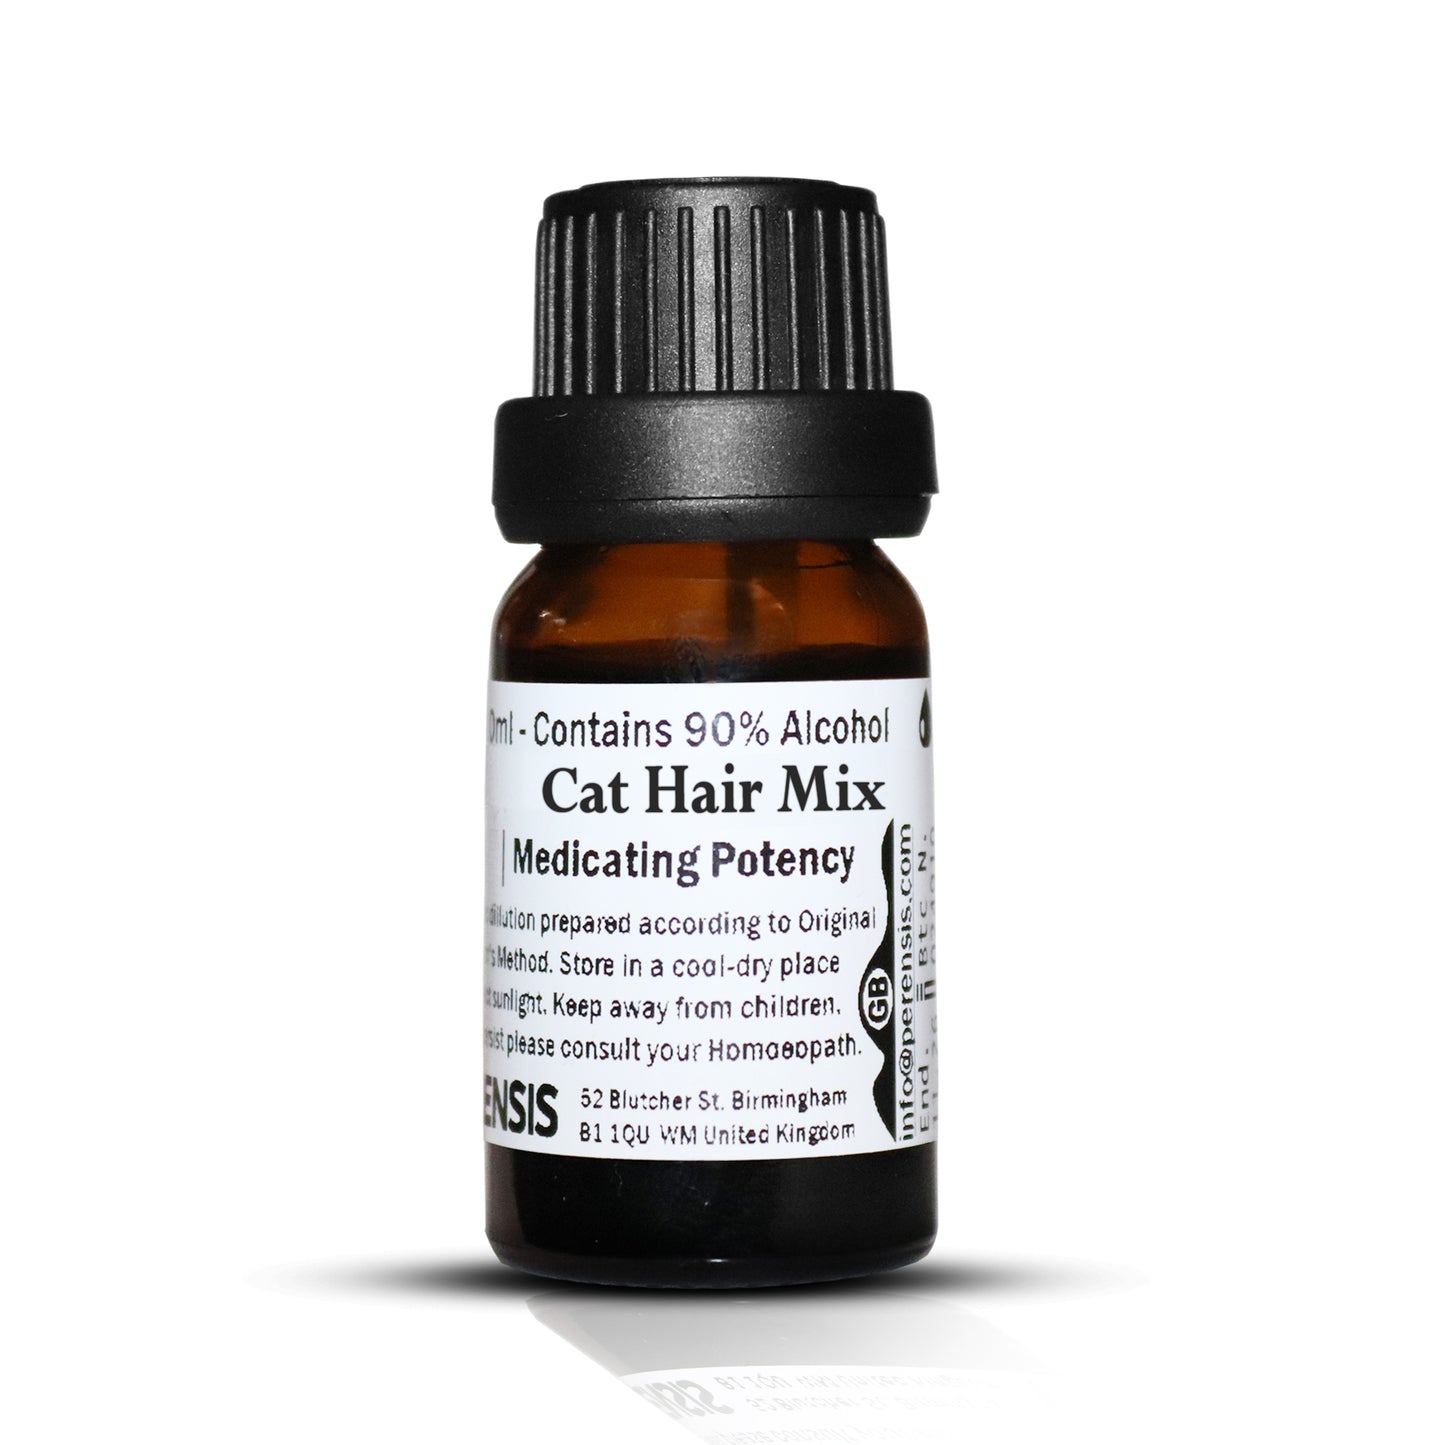 Cat Hair Mix